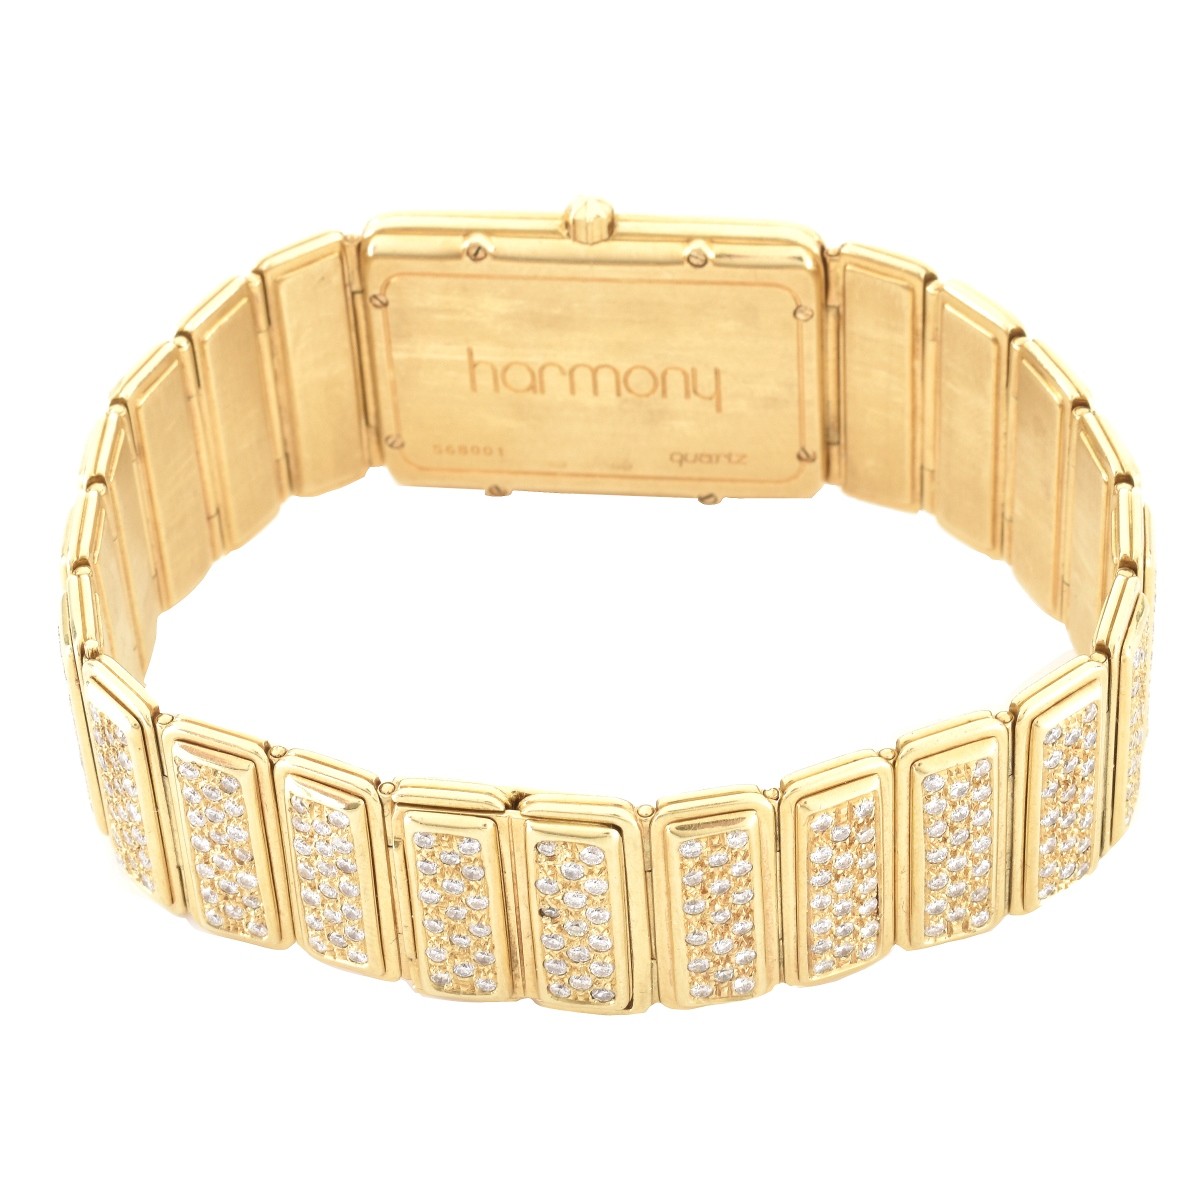 Vacheron Constantin 18K Gold Watch - Image 3 of 5